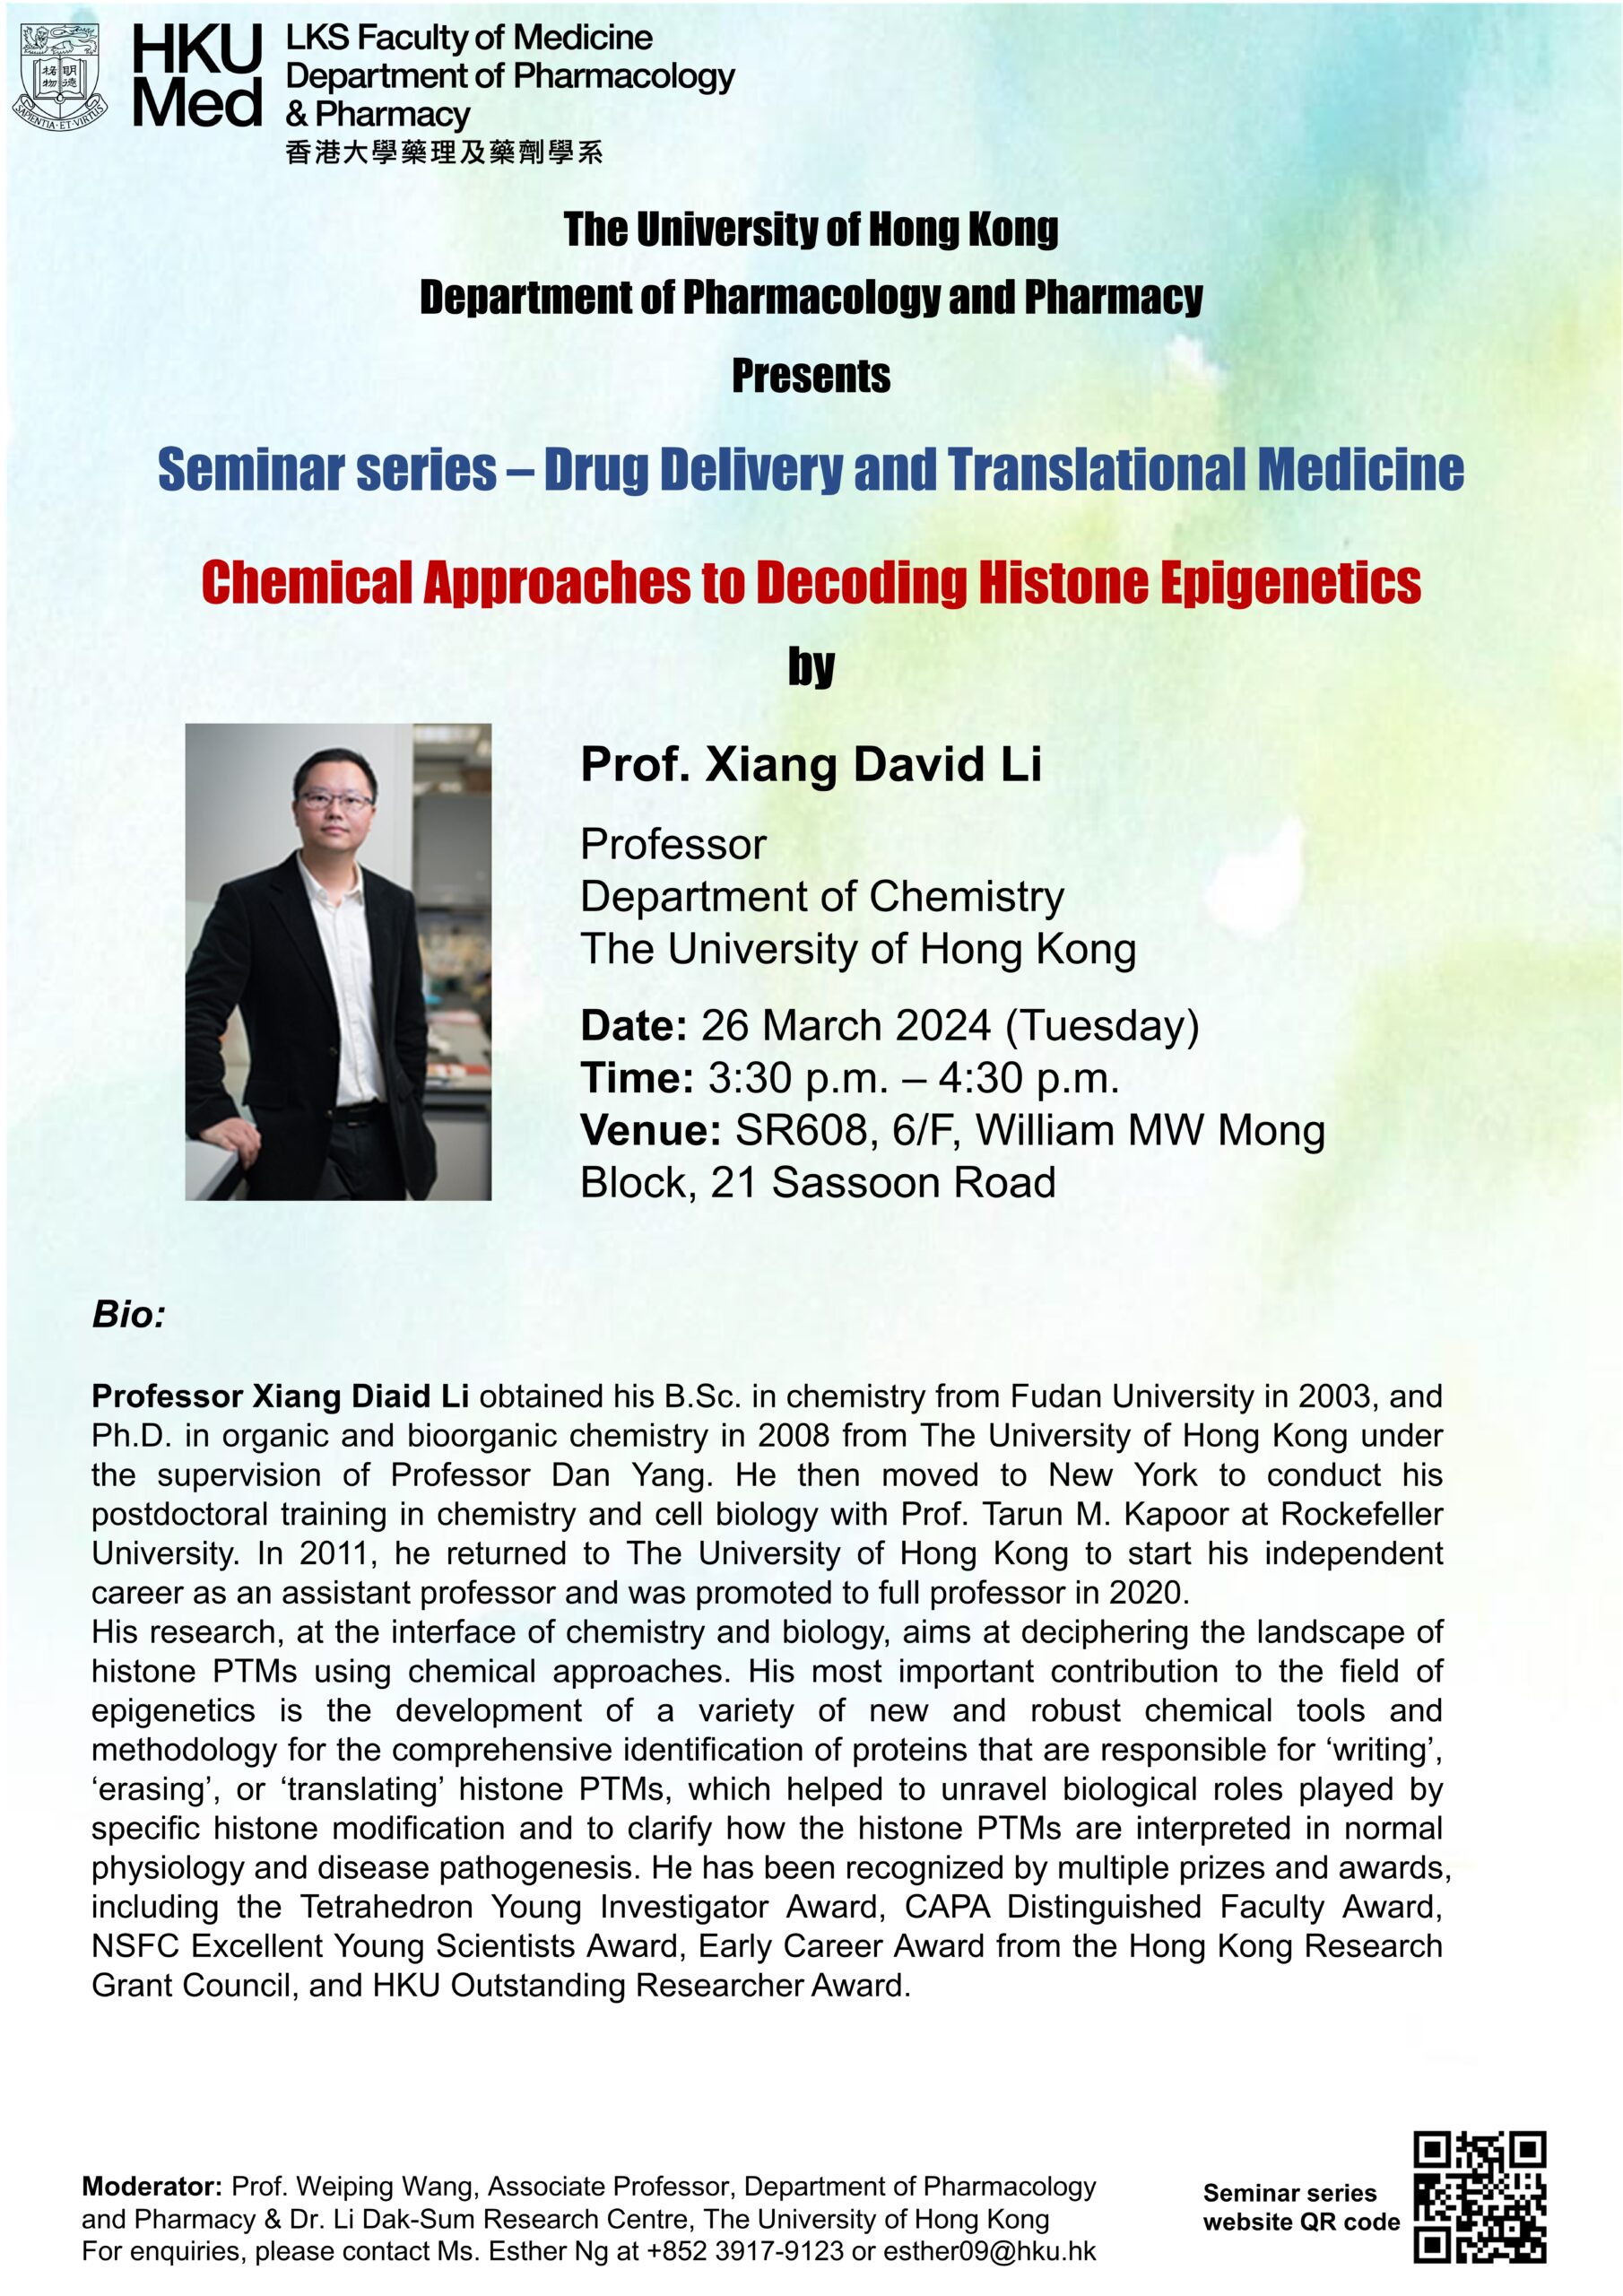 Poster - Prof. Xiang David Li